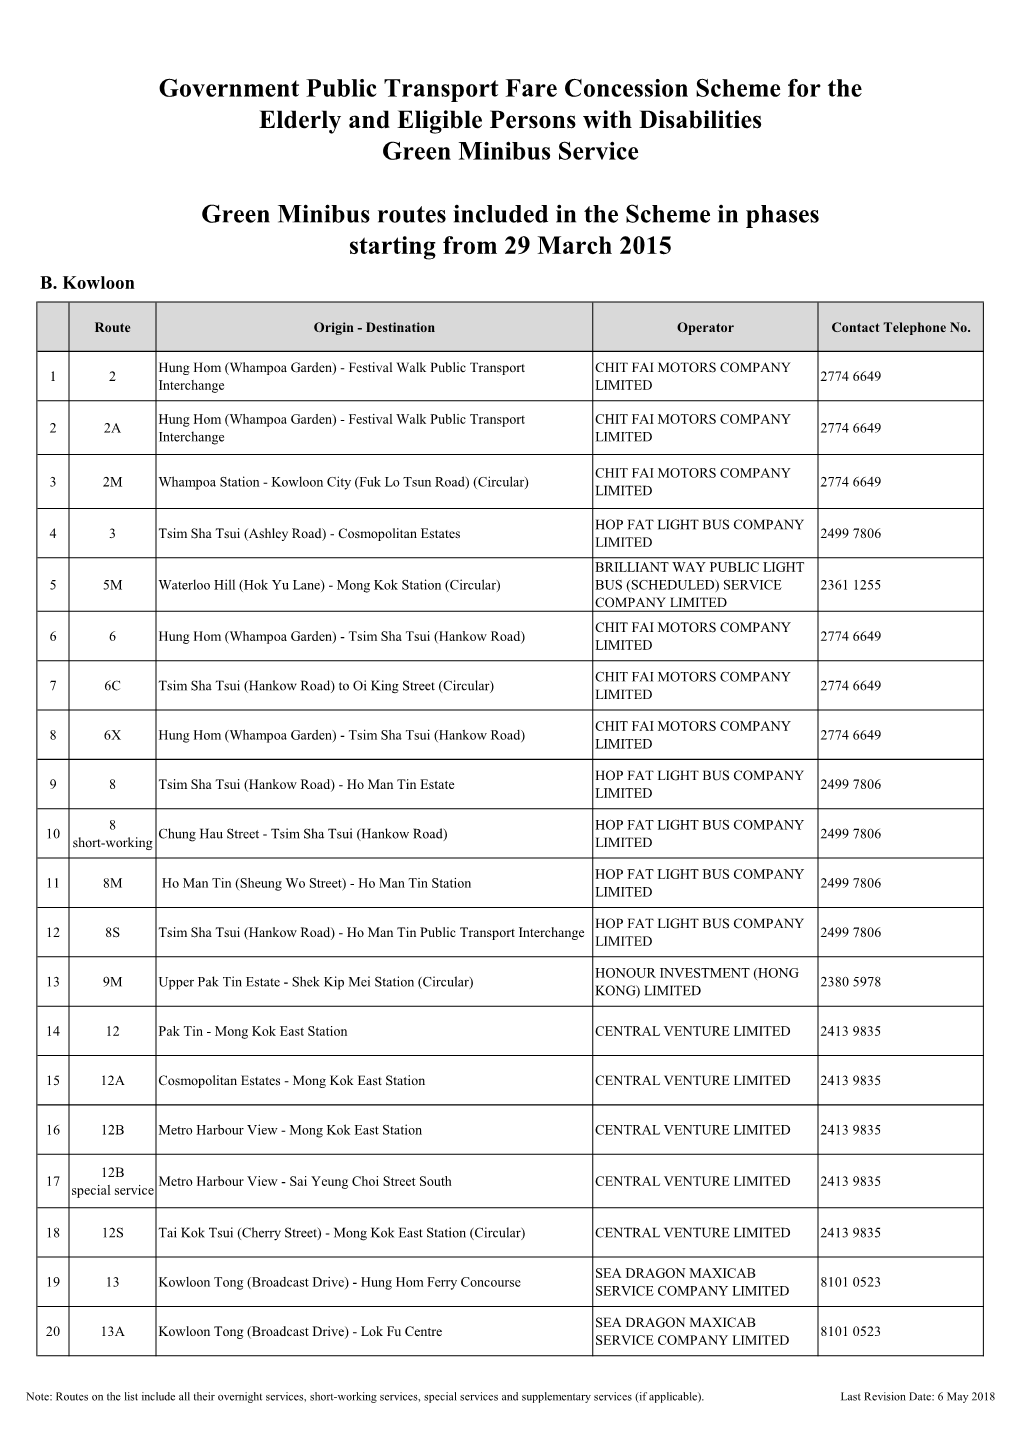 Route List of the Scheme (Nt Hki Kln) (20180506) (EN)